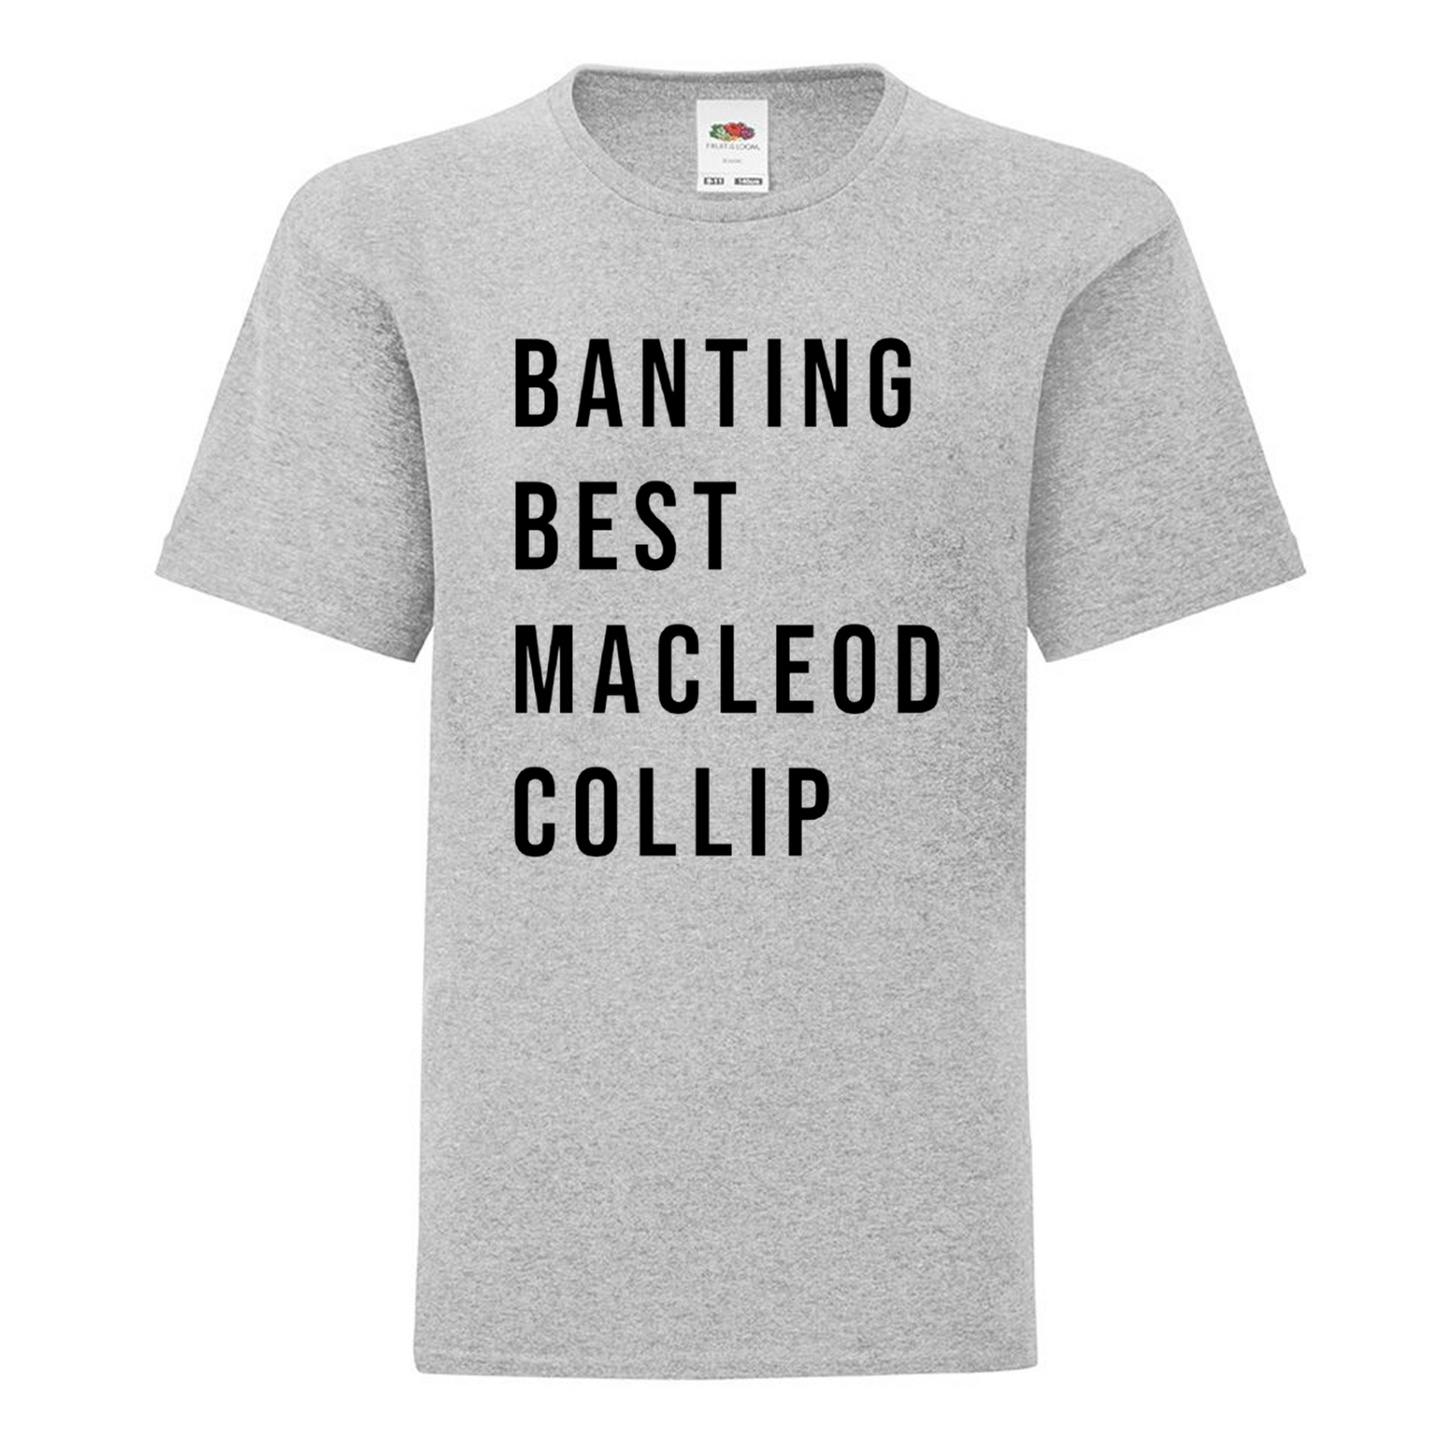 Banting, Best, Macleod & Collip Kids T Shirt